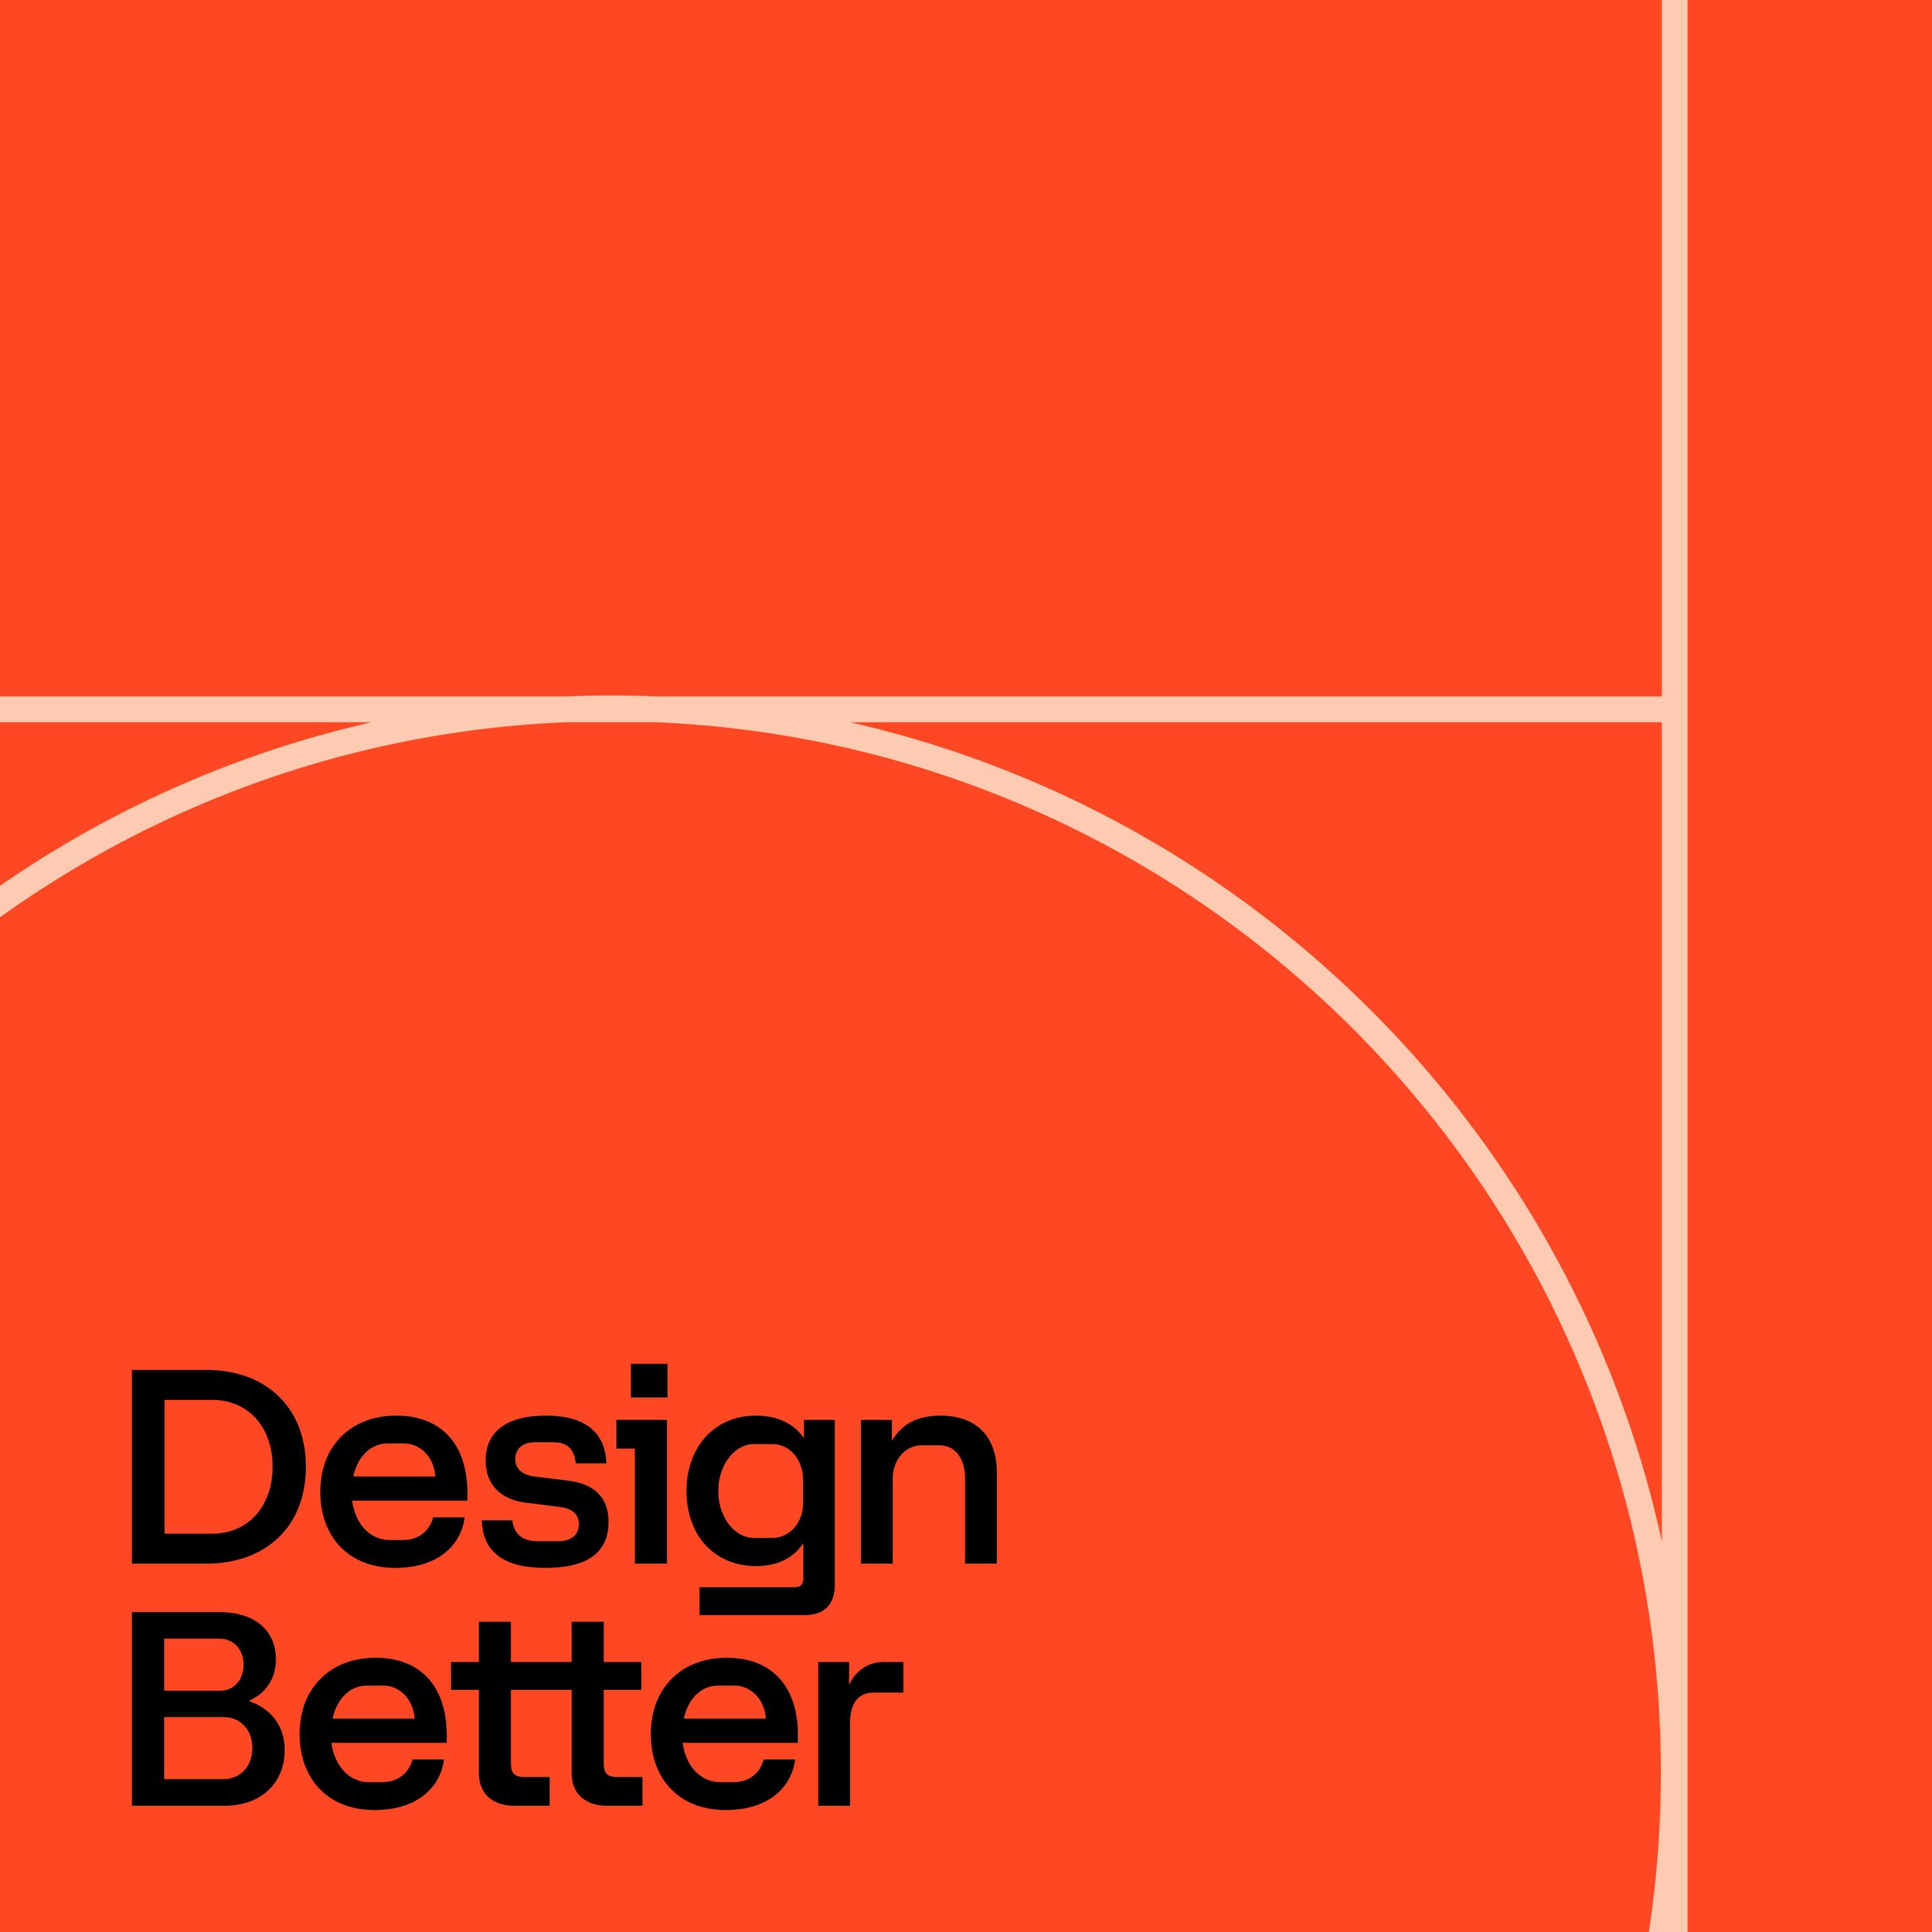 John Maeda: Design in Tech Report